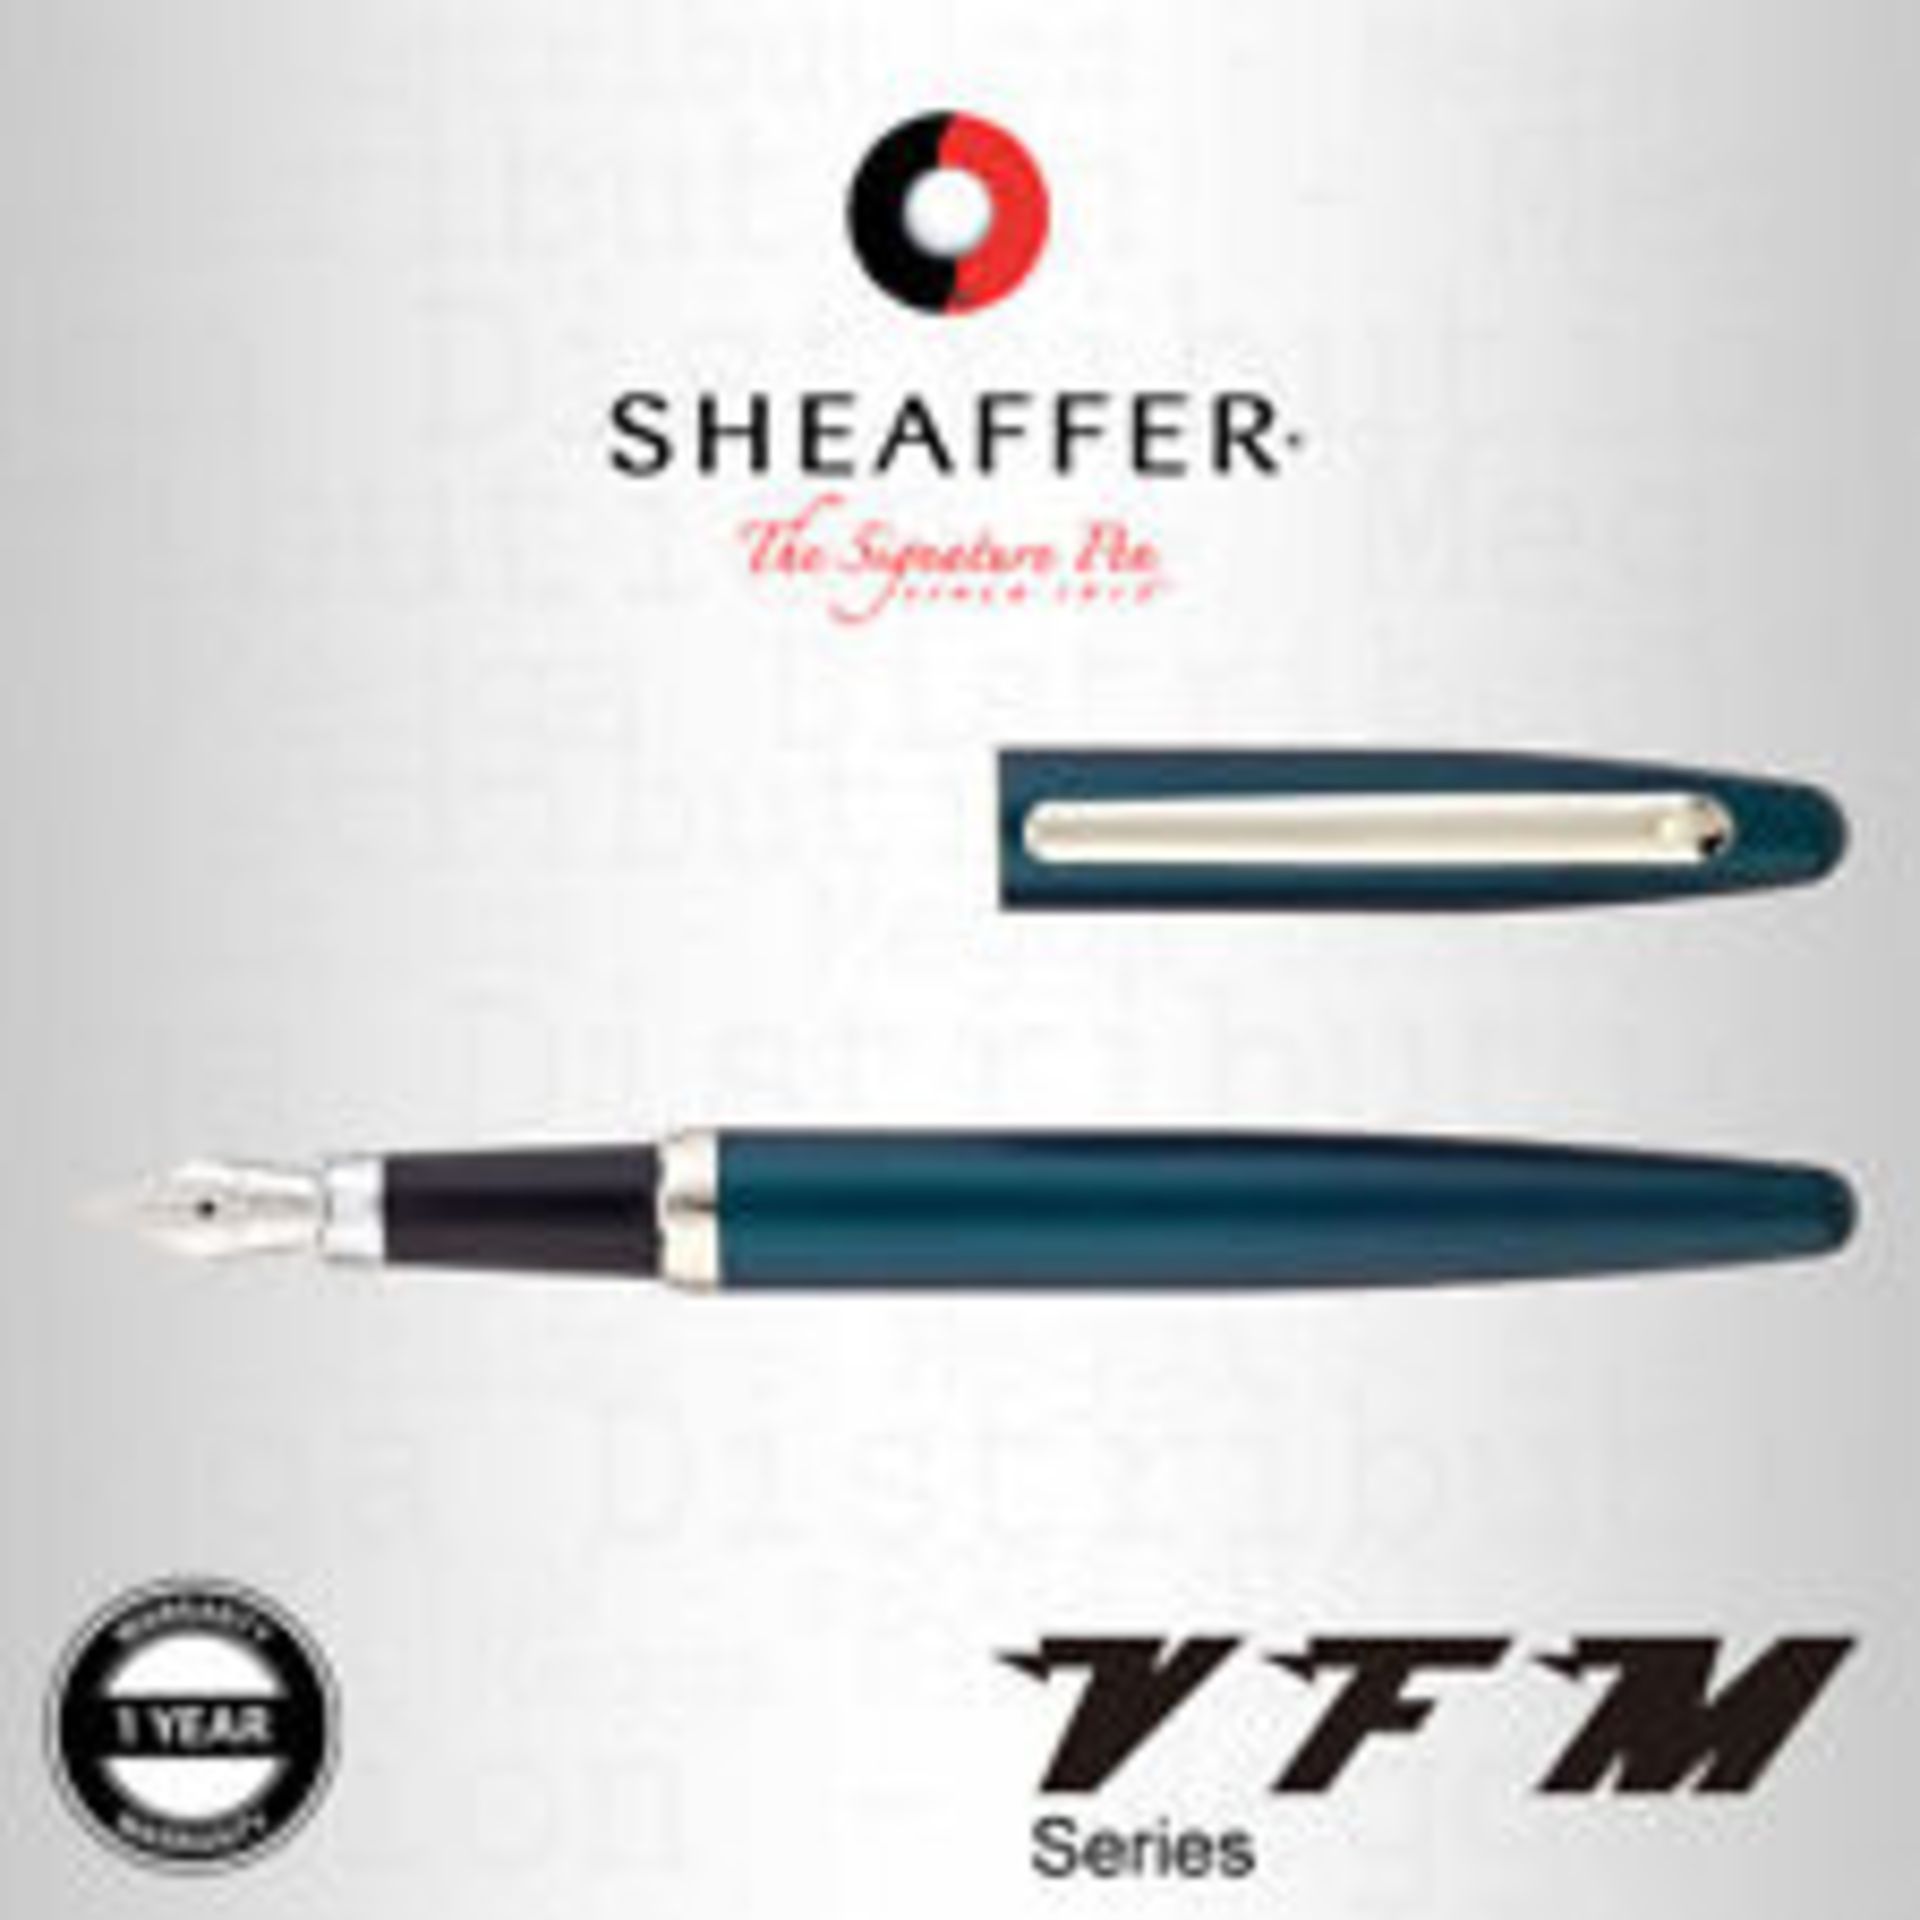 V Brand New Sheaffer VFM Fountain Pen In Satin Peacock Green And Chrome Trim In Presentation Case - Image 2 of 2